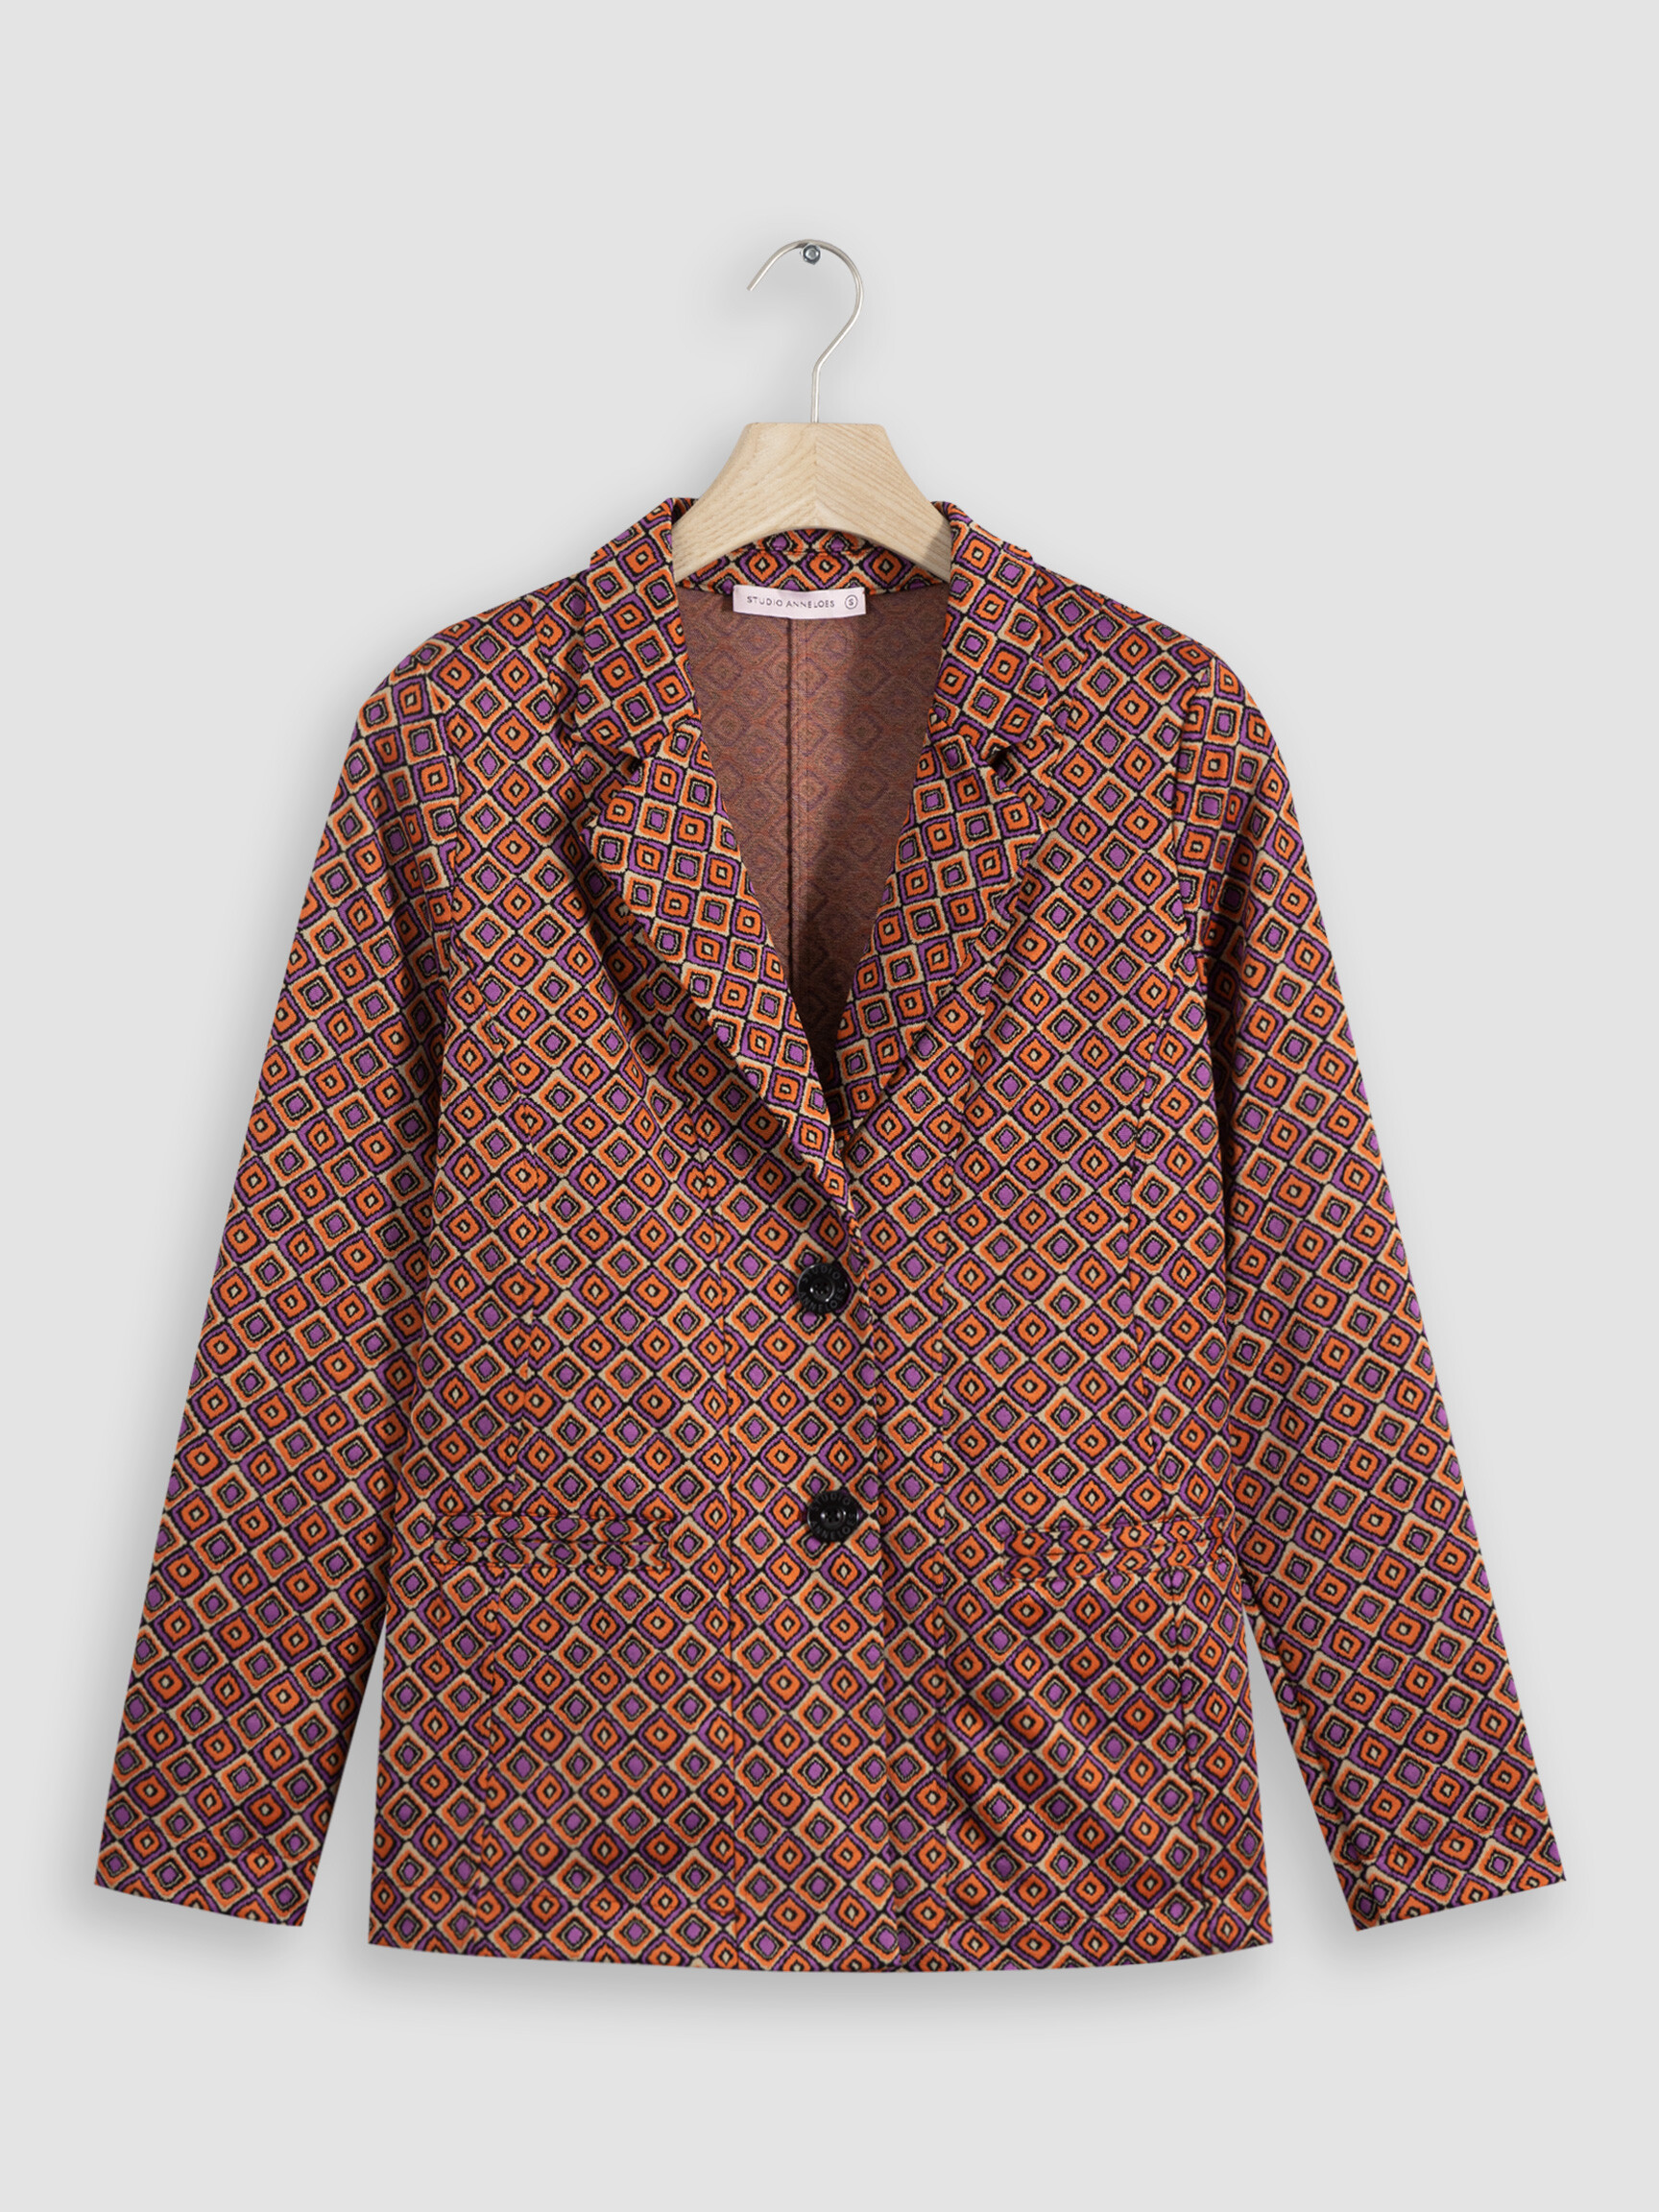 Léa Seydoux nails understated elegance in an oversized blazer as